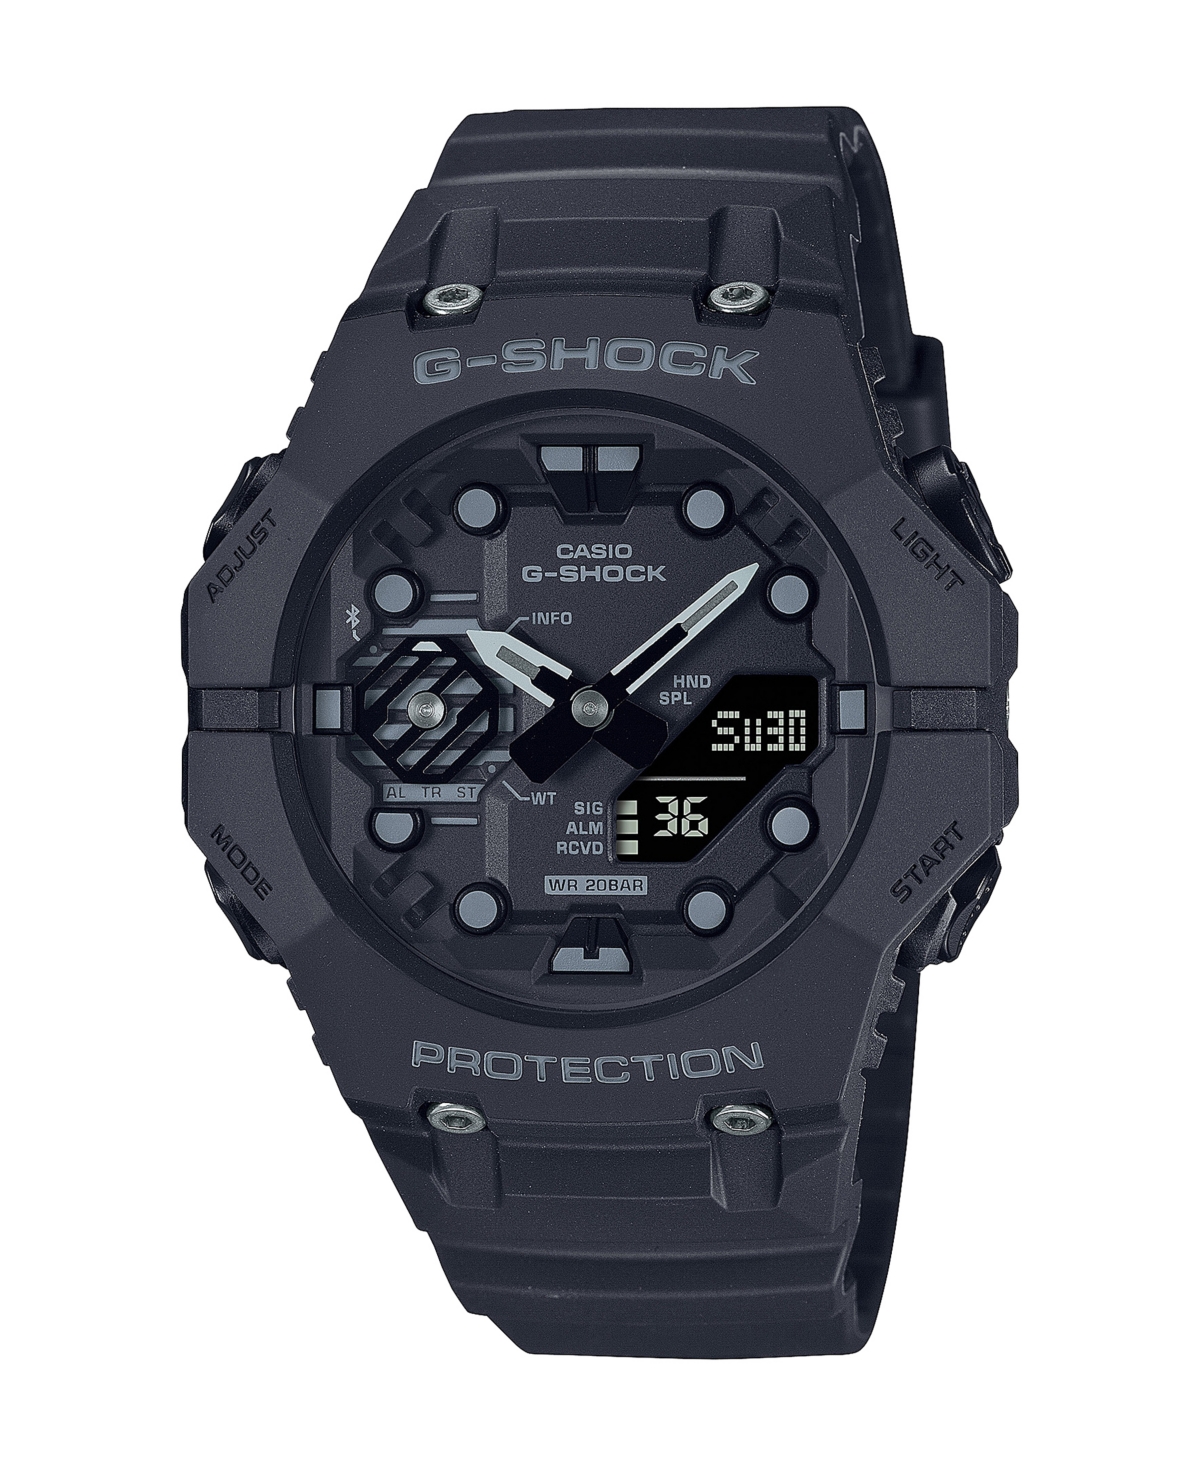 Men's Two Hand Quartz Black Resin Bluetooth Watch, 46.0mm GAB001-1A - Black